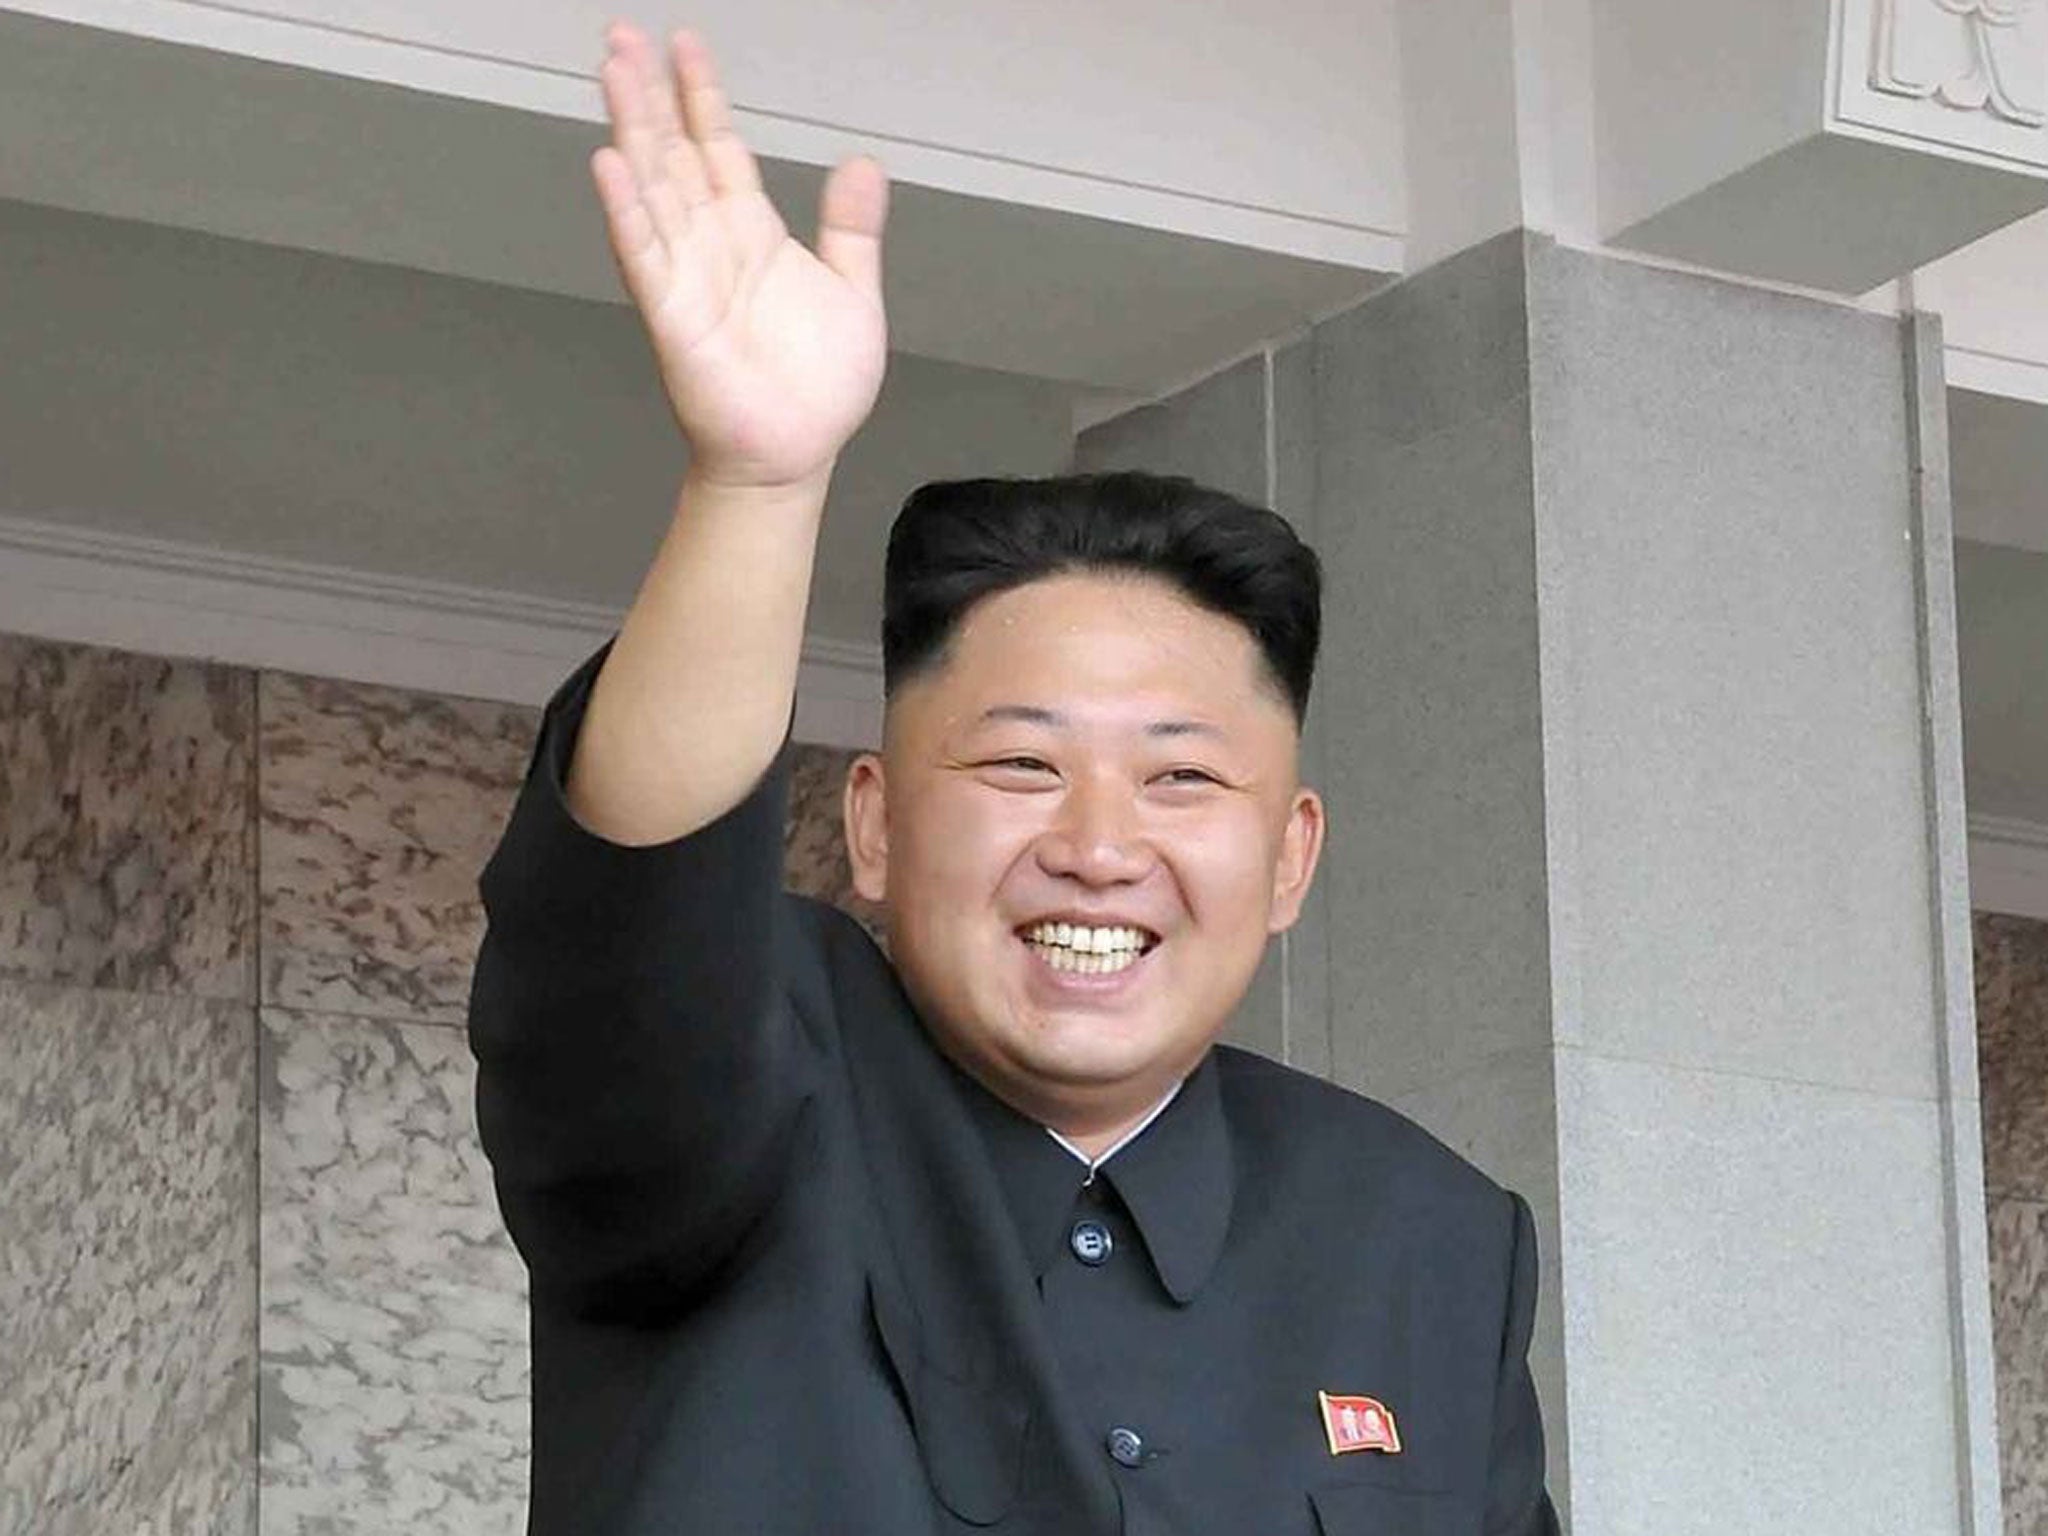 Dennis Rodman's North Korea trip inspires comedy film